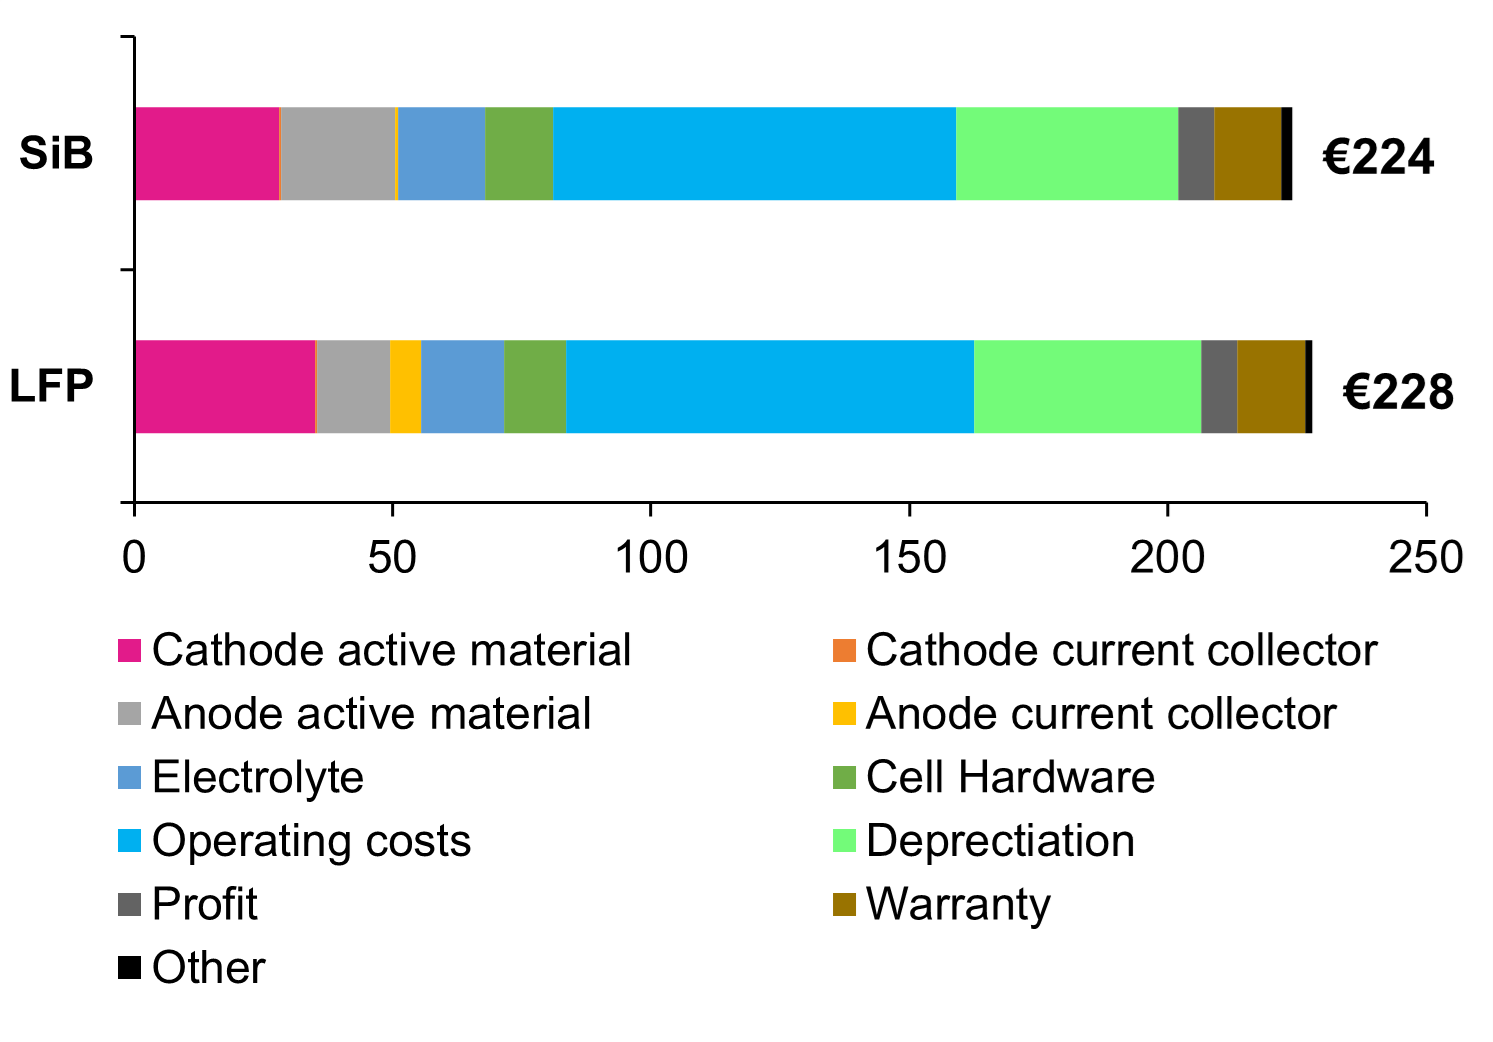 Sodium-ion vs LFP cell manufacturing costs comparison